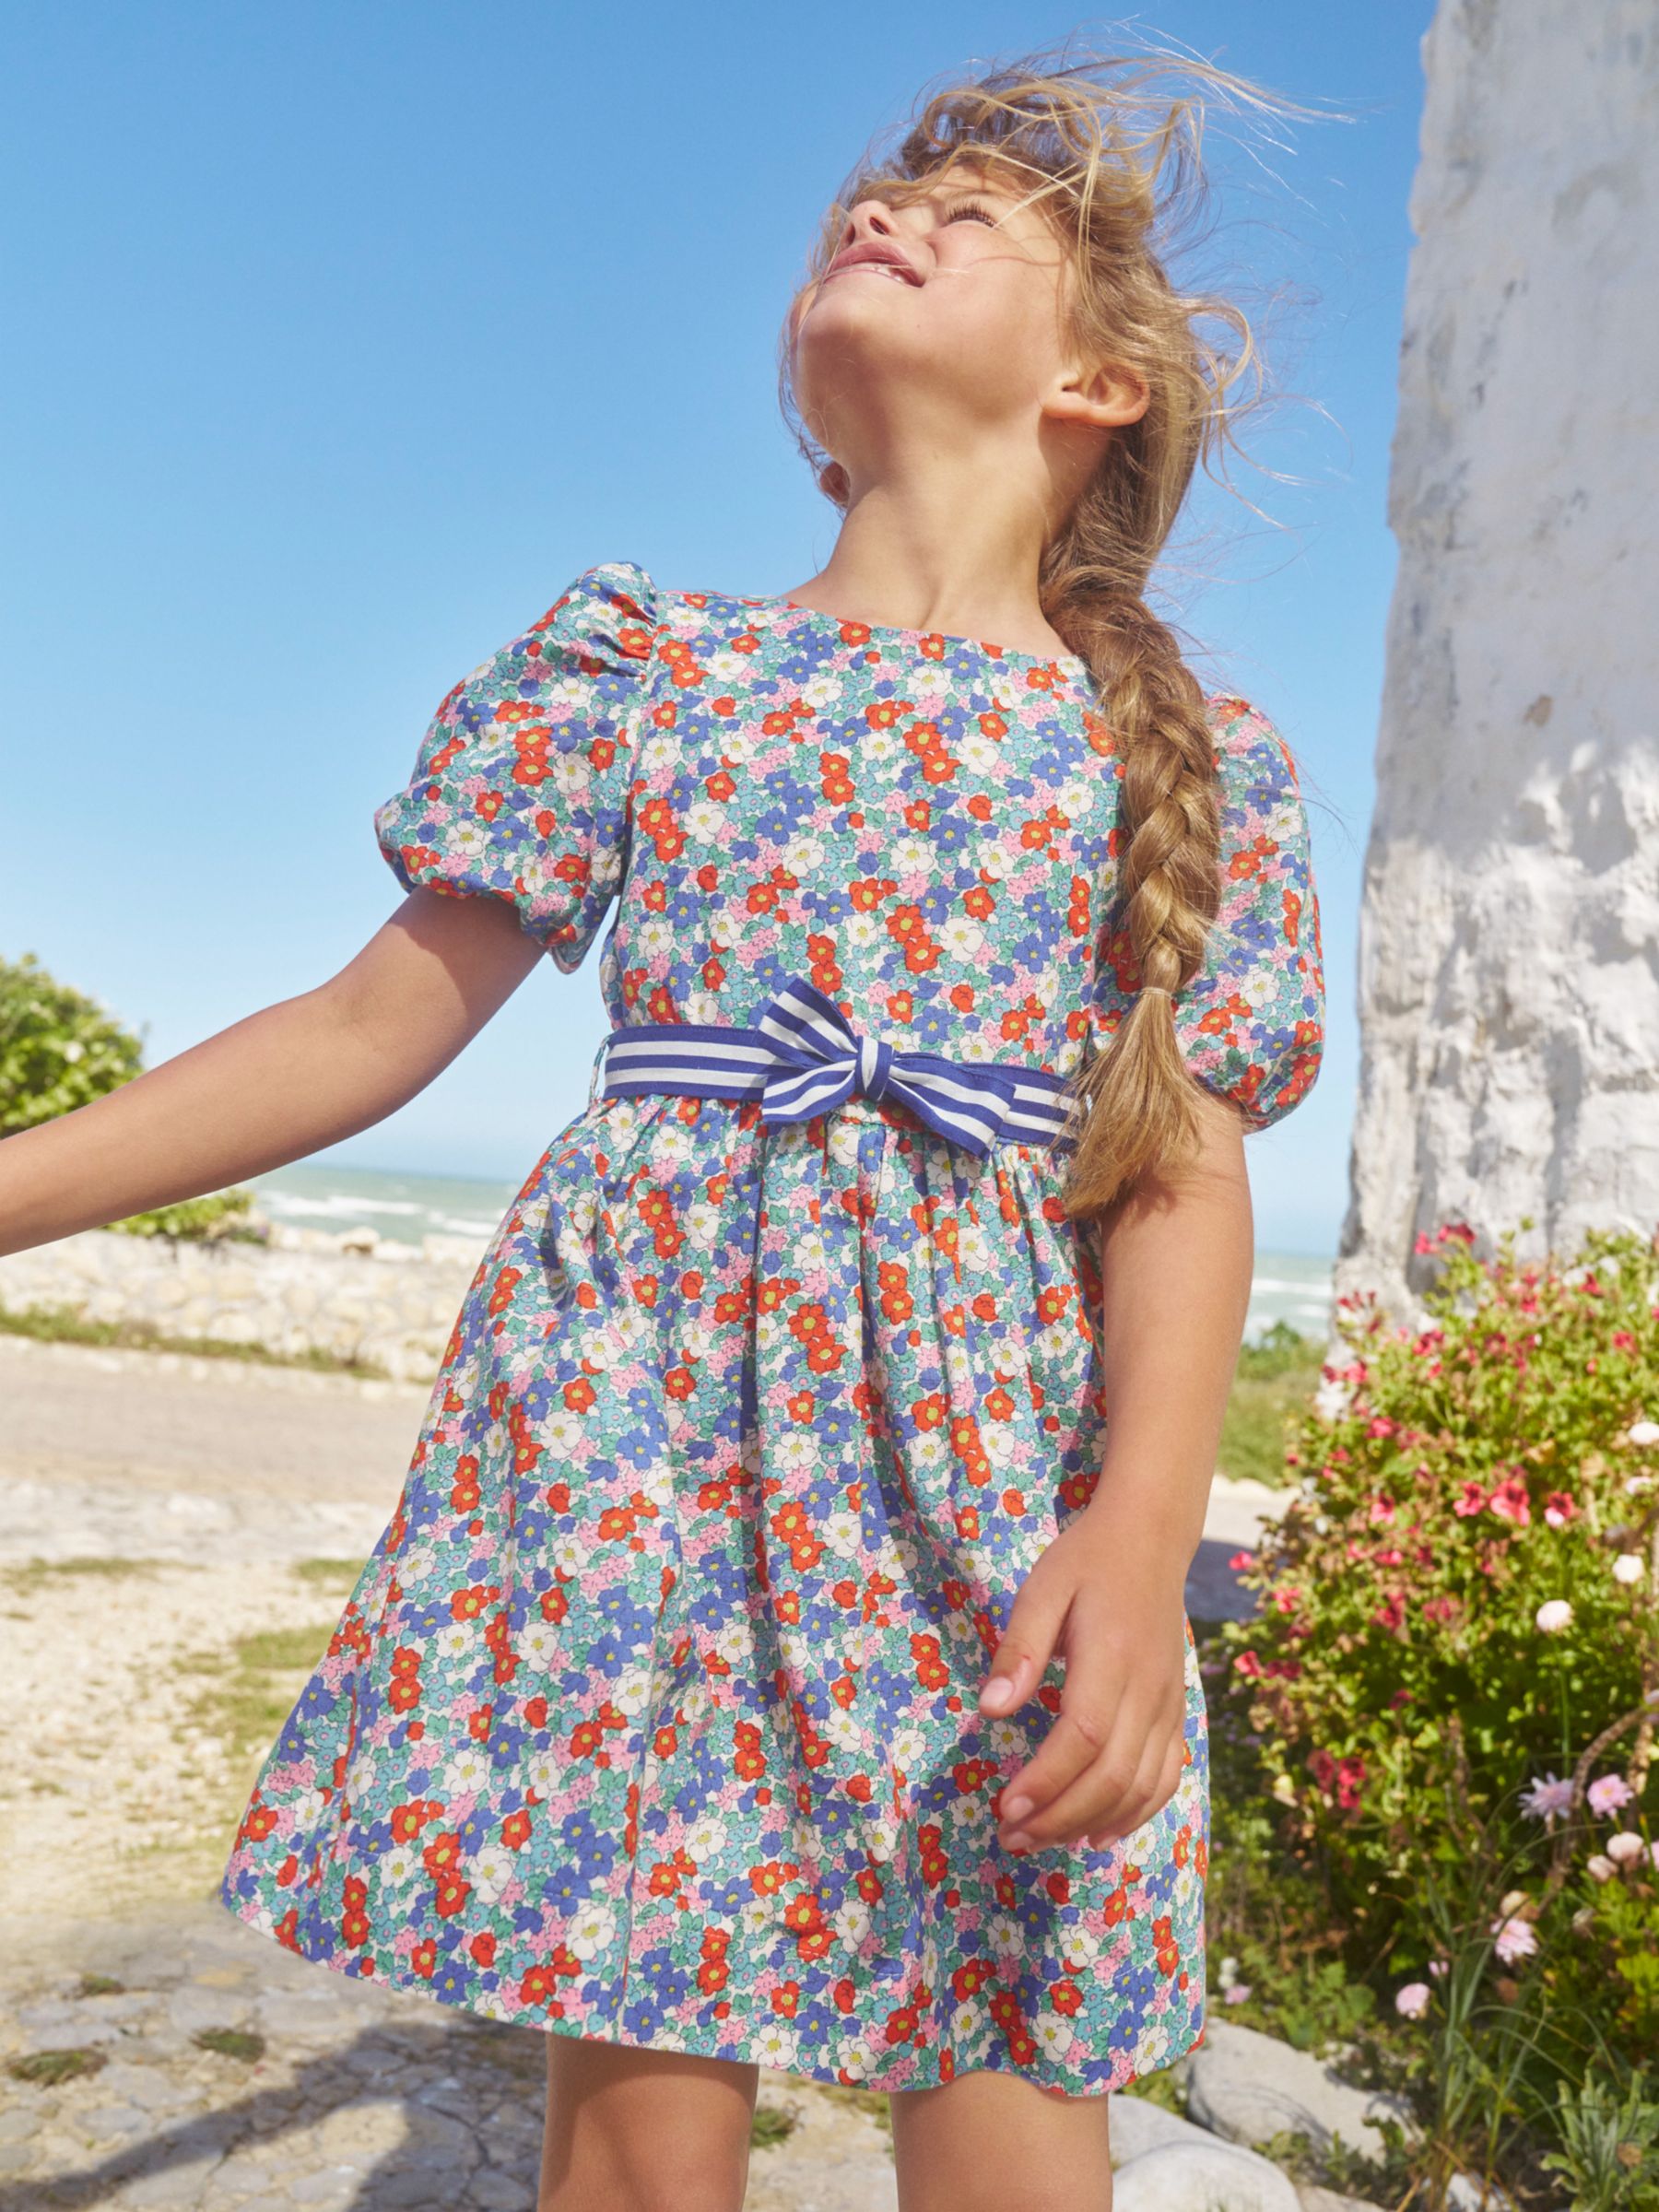 Mini Boden Kids' Floral Linen Blend Vintage Bow Dress, Nautical Floral, 3-4 years